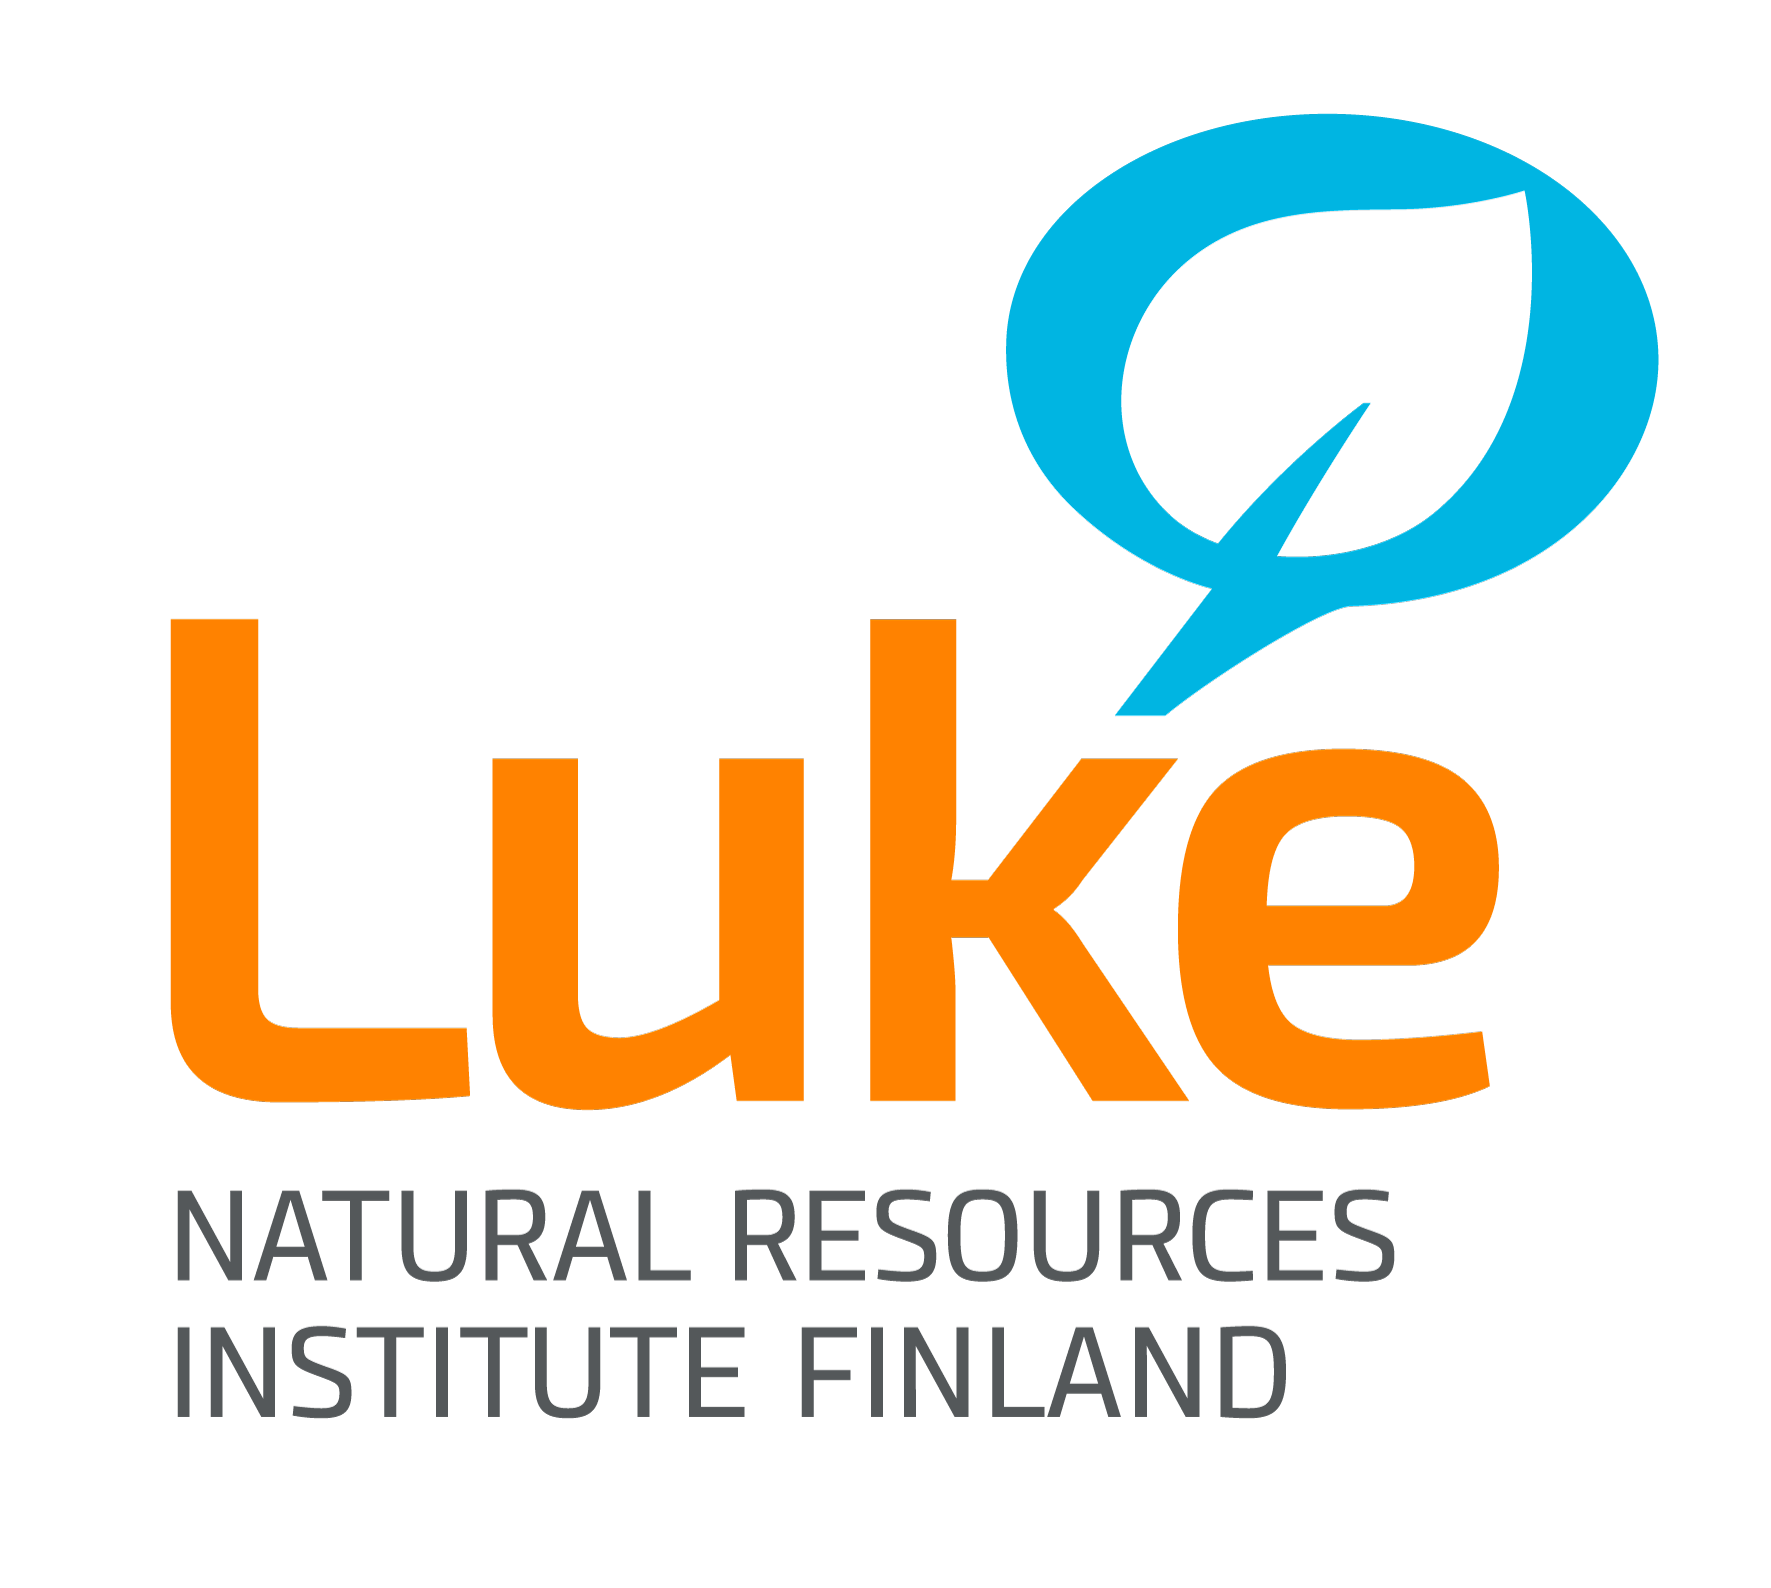 Natural Resources Institute Finland (Luke) logo